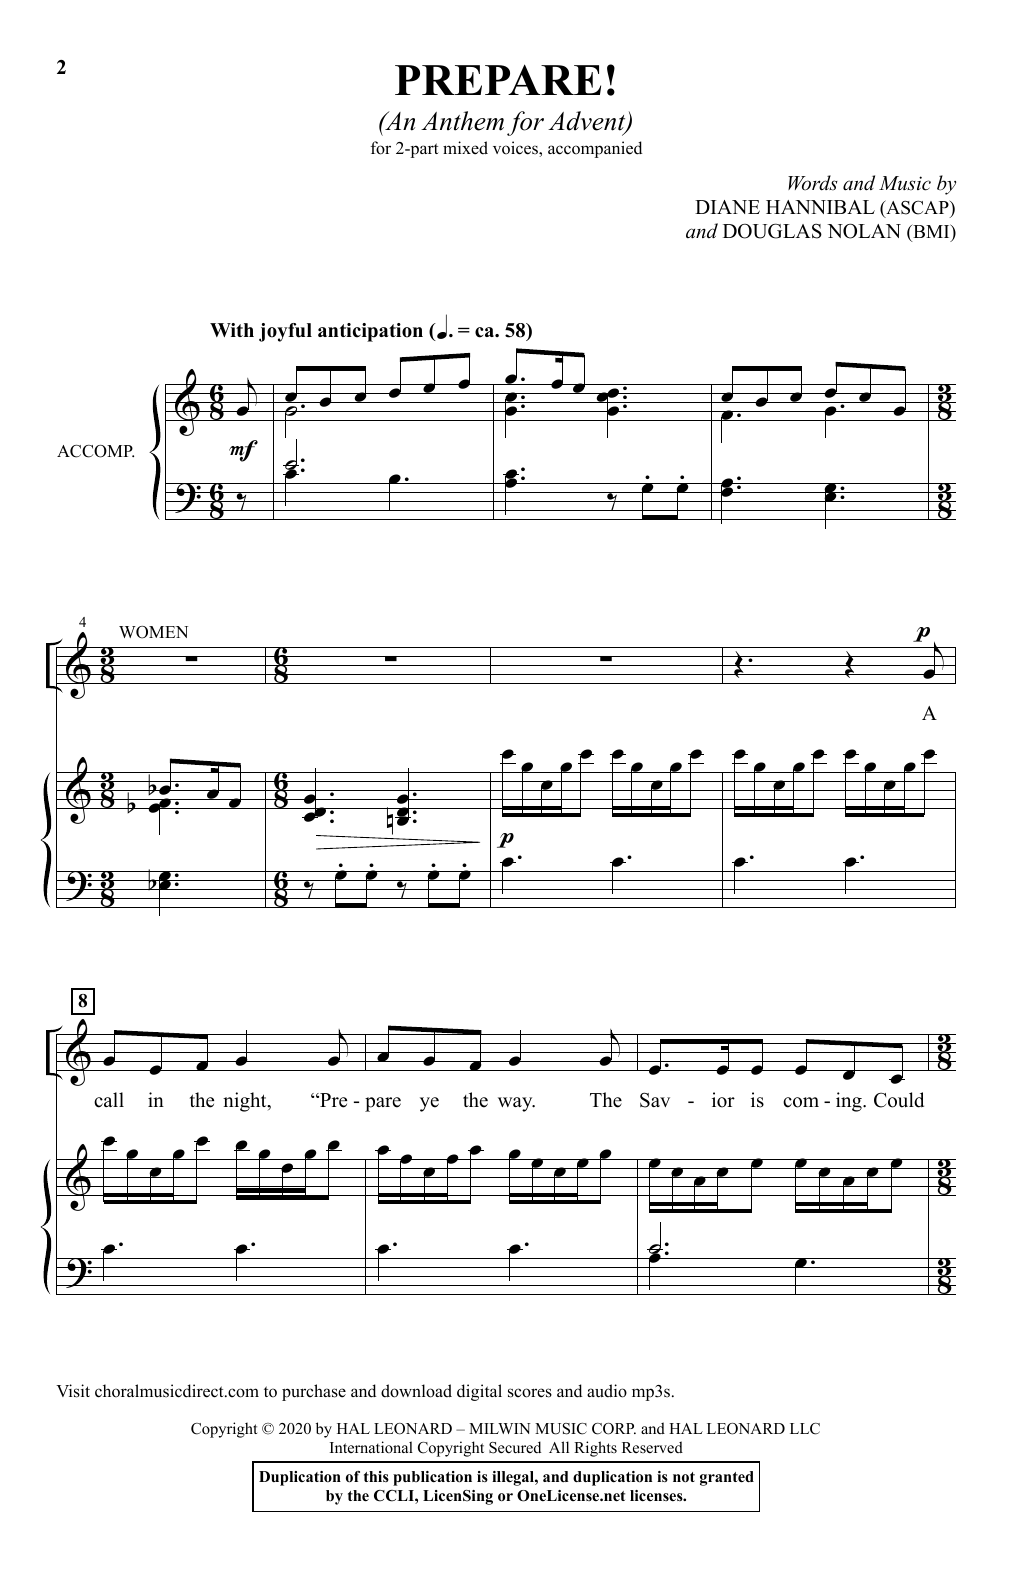 Diane Hannibal & Douglas Nolan Prepare! (An Anthem For Advent) Sheet Music Notes & Chords for 2-Part Choir - Download or Print PDF